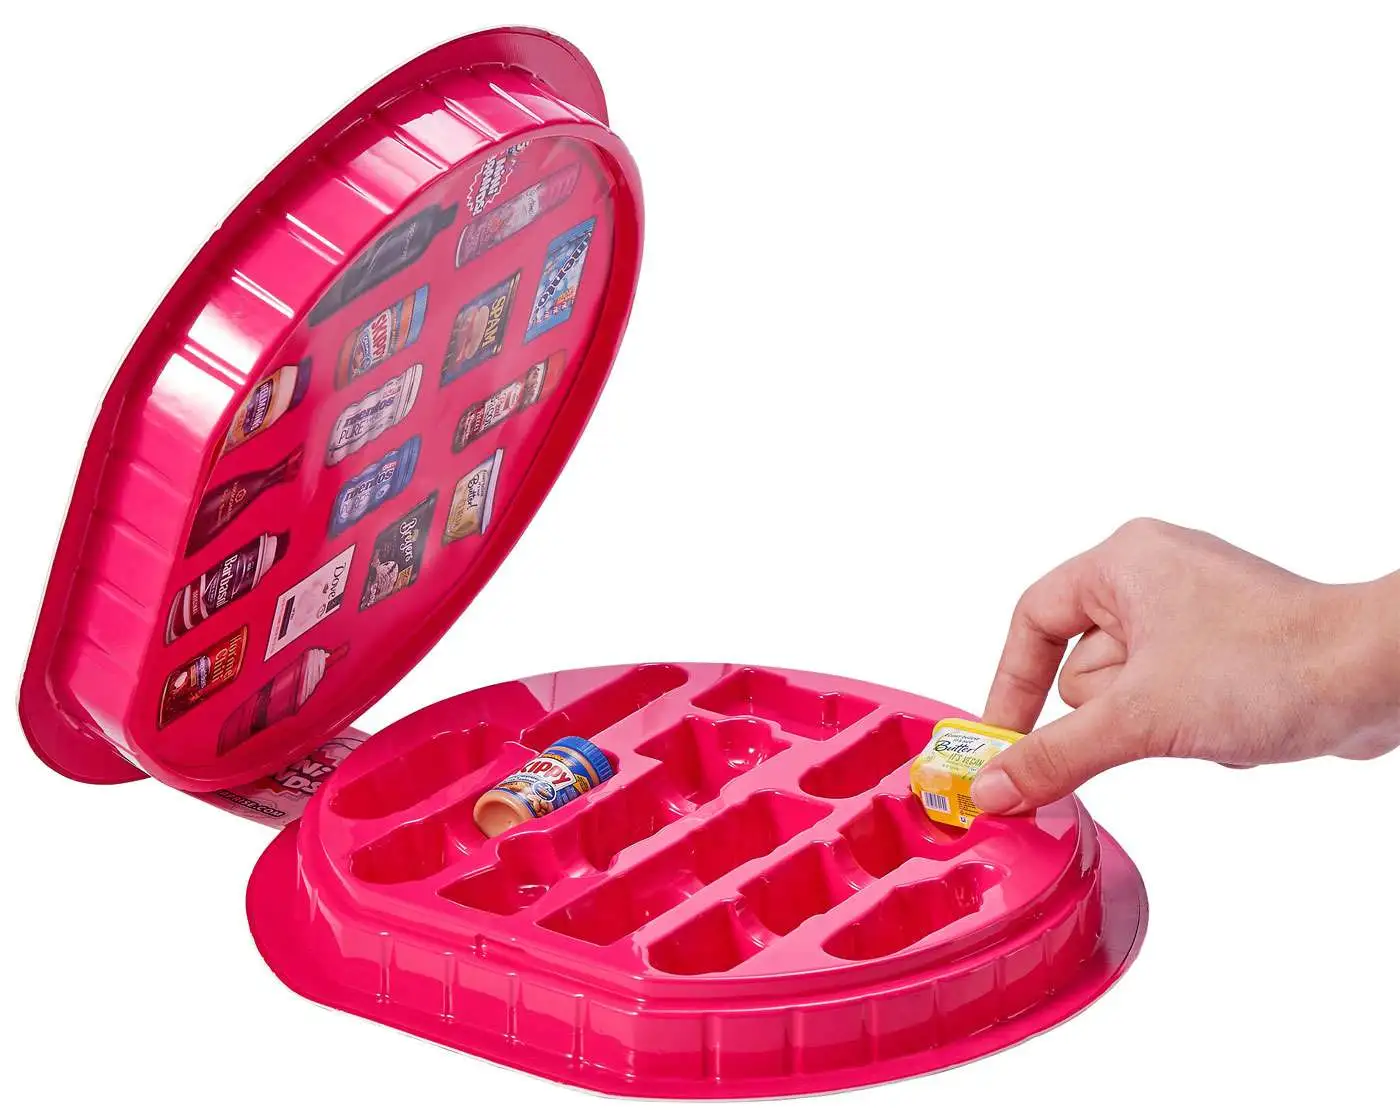 Zuru™ 5 Surprise™ Toy Mini Brands! Collector's Case